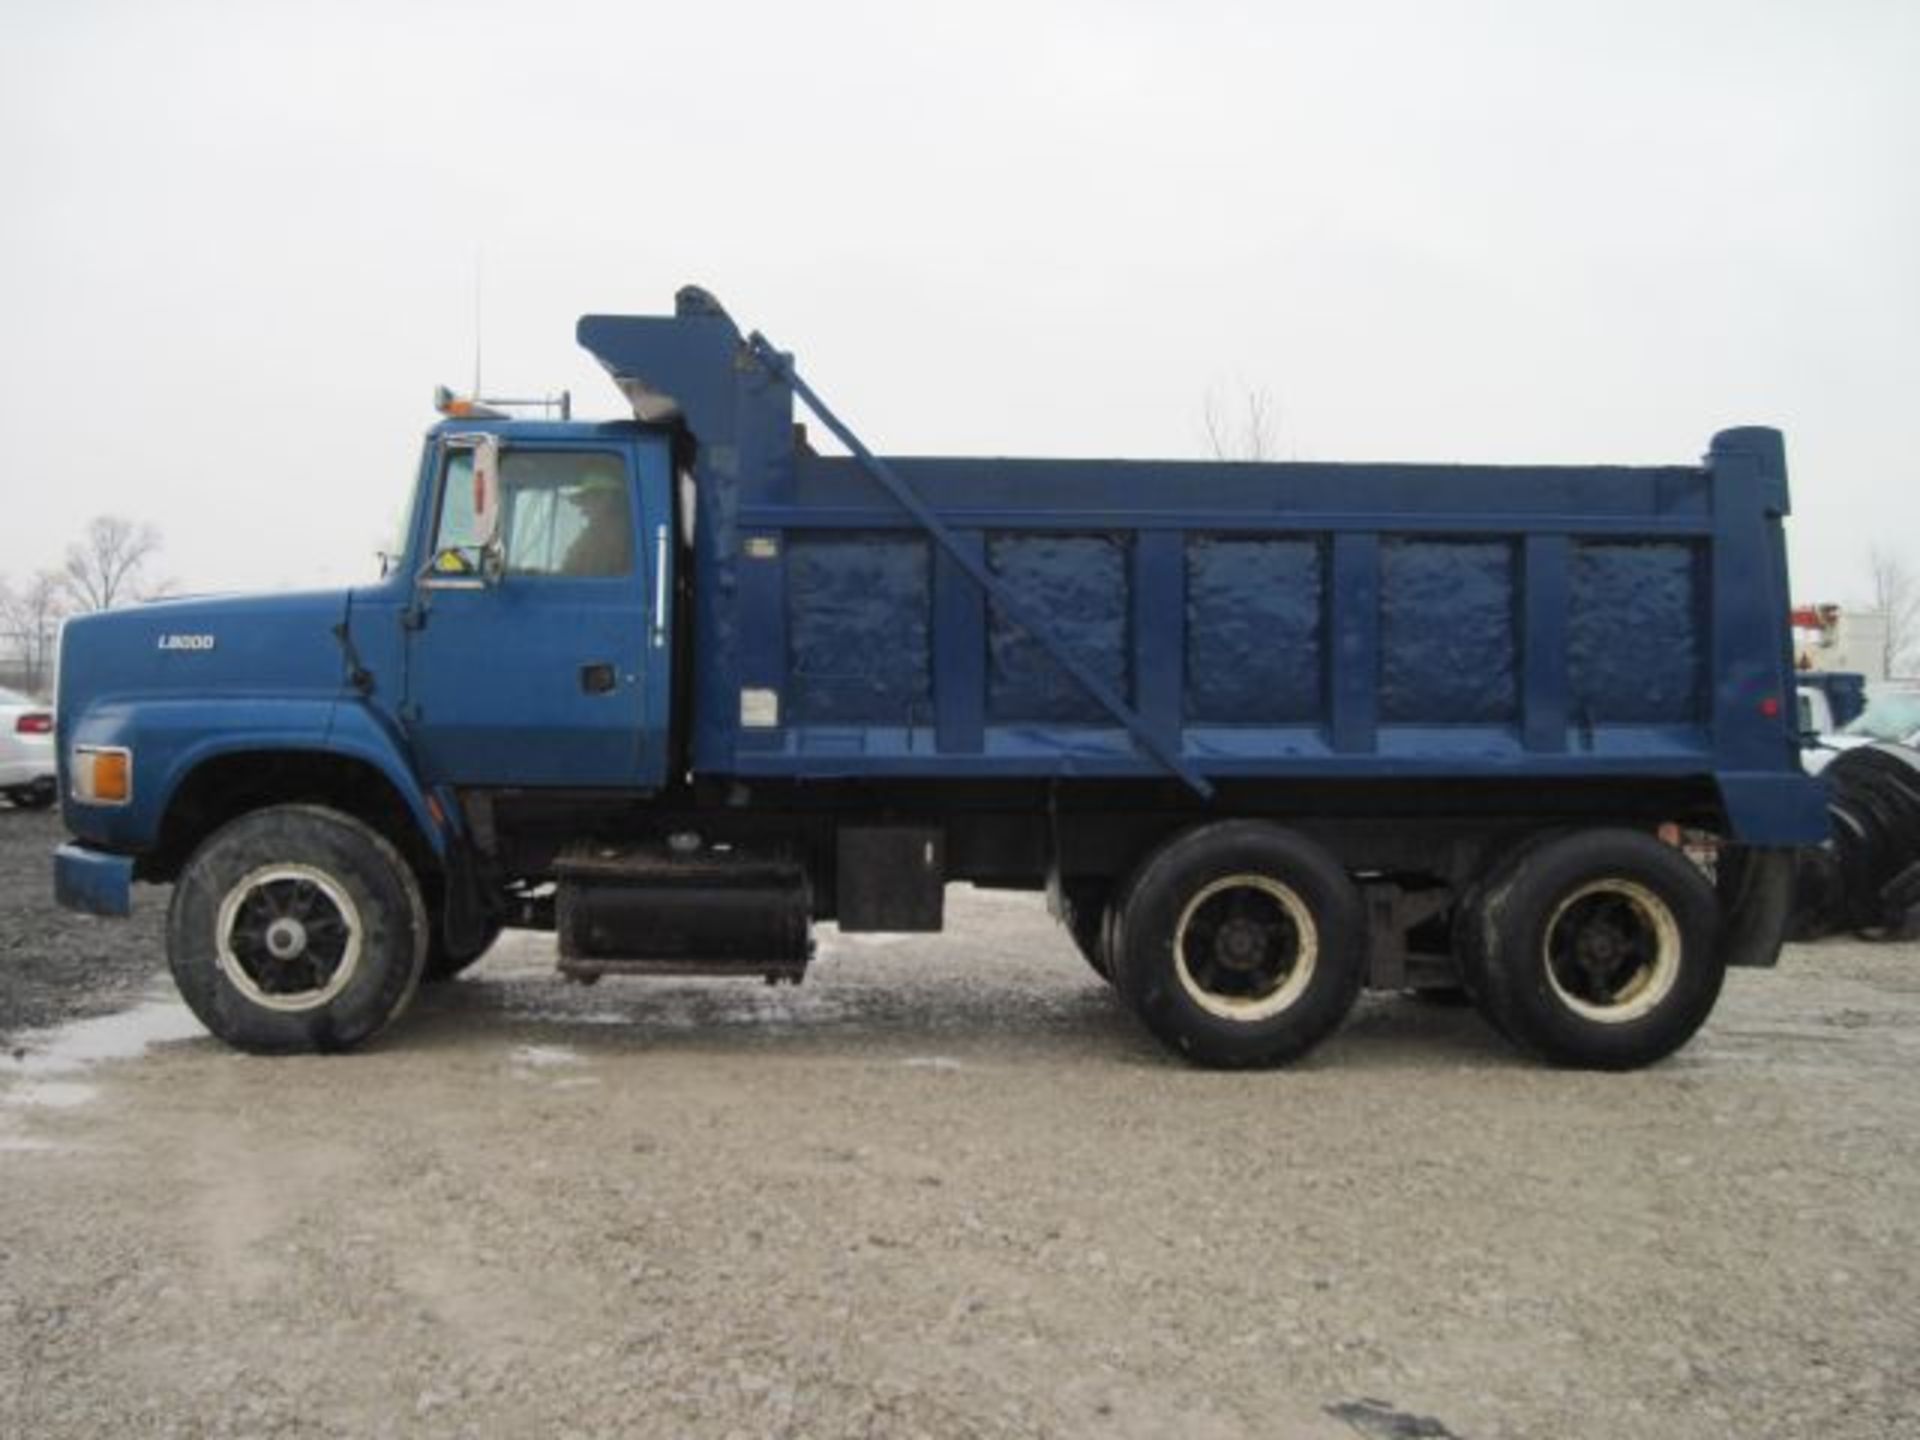 Lot# 110 1996 Ford L8000 Dump Truck 1996 Ford L8000 Dump Truck, 501227Km, Vin# 1FDYS82E2TVA18314